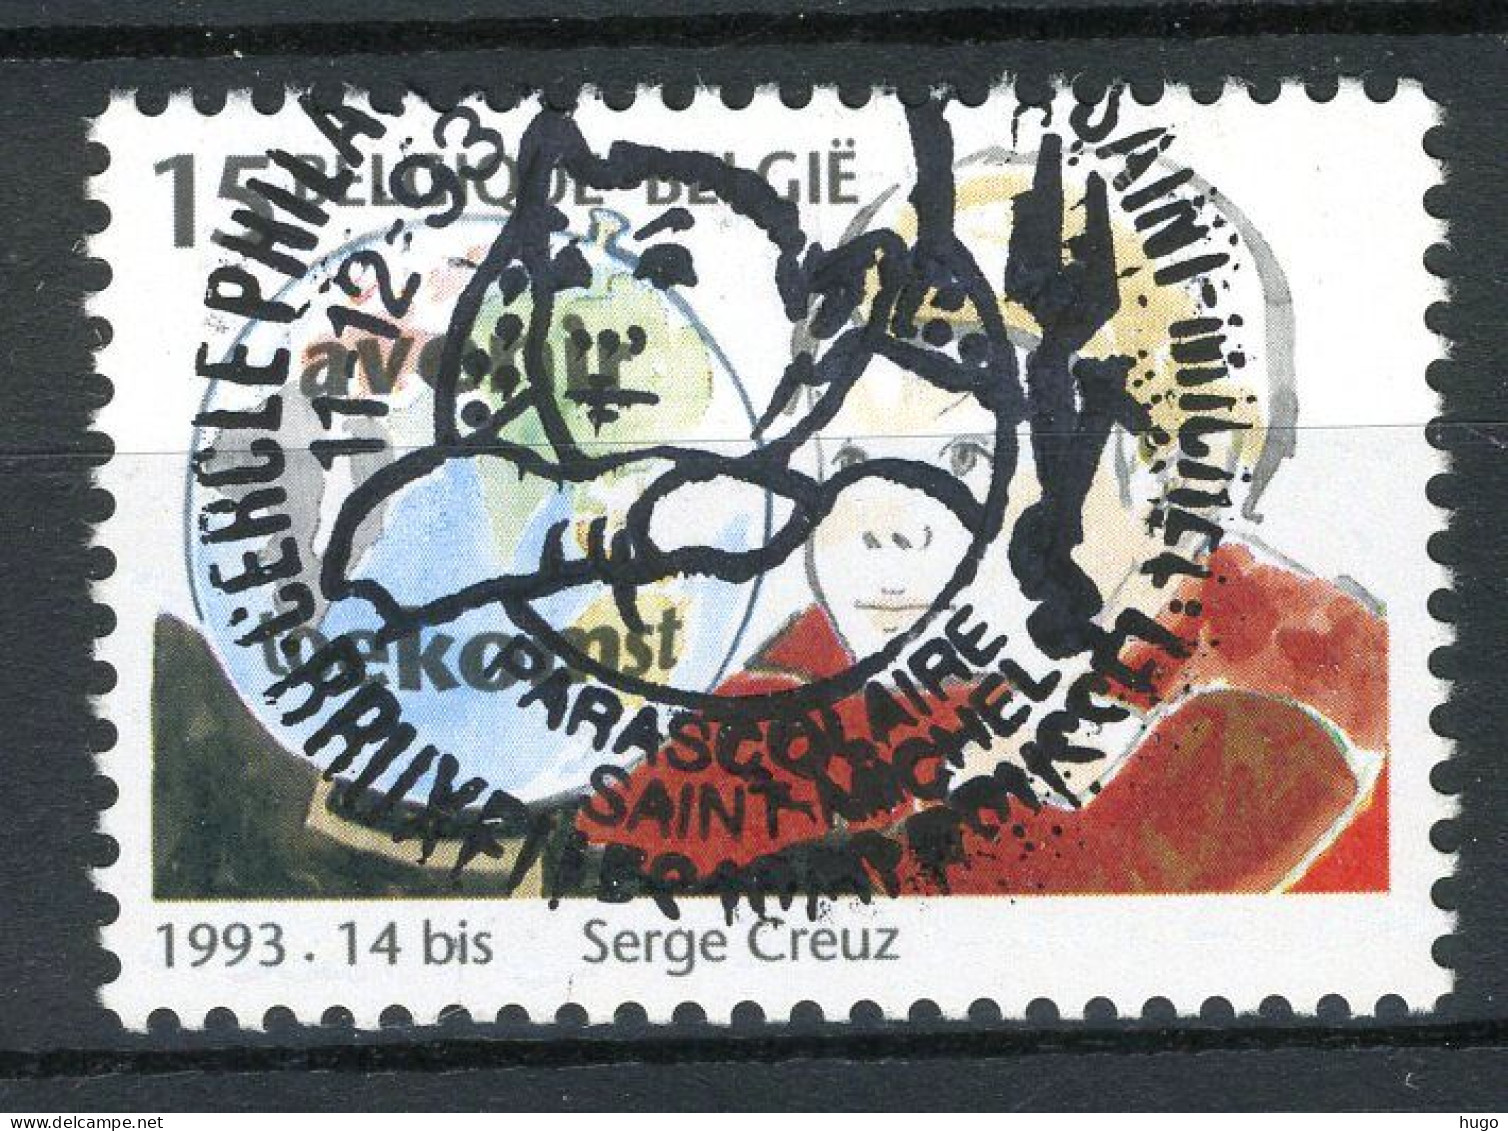 (B) 2531 MNH FDC 1993 - Kinderen - Unused Stamps